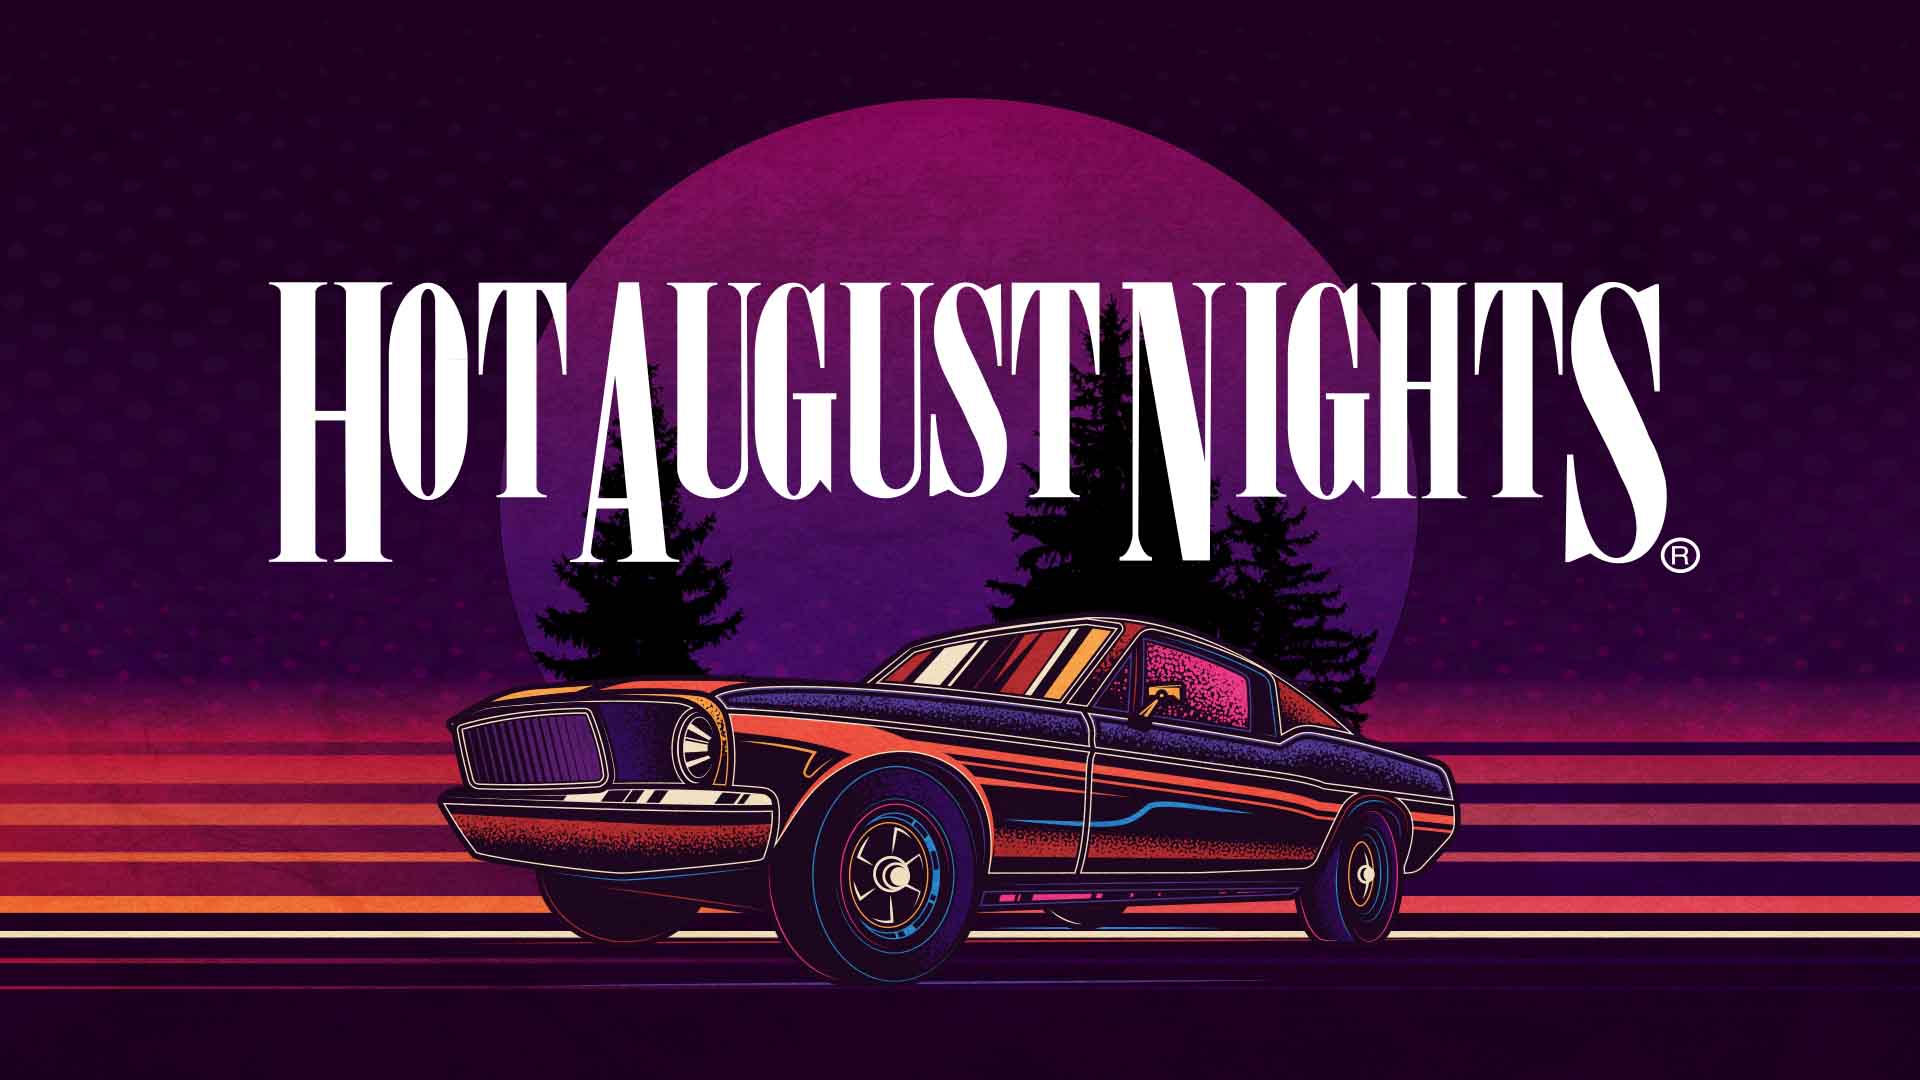 Hot August Nights at GSR